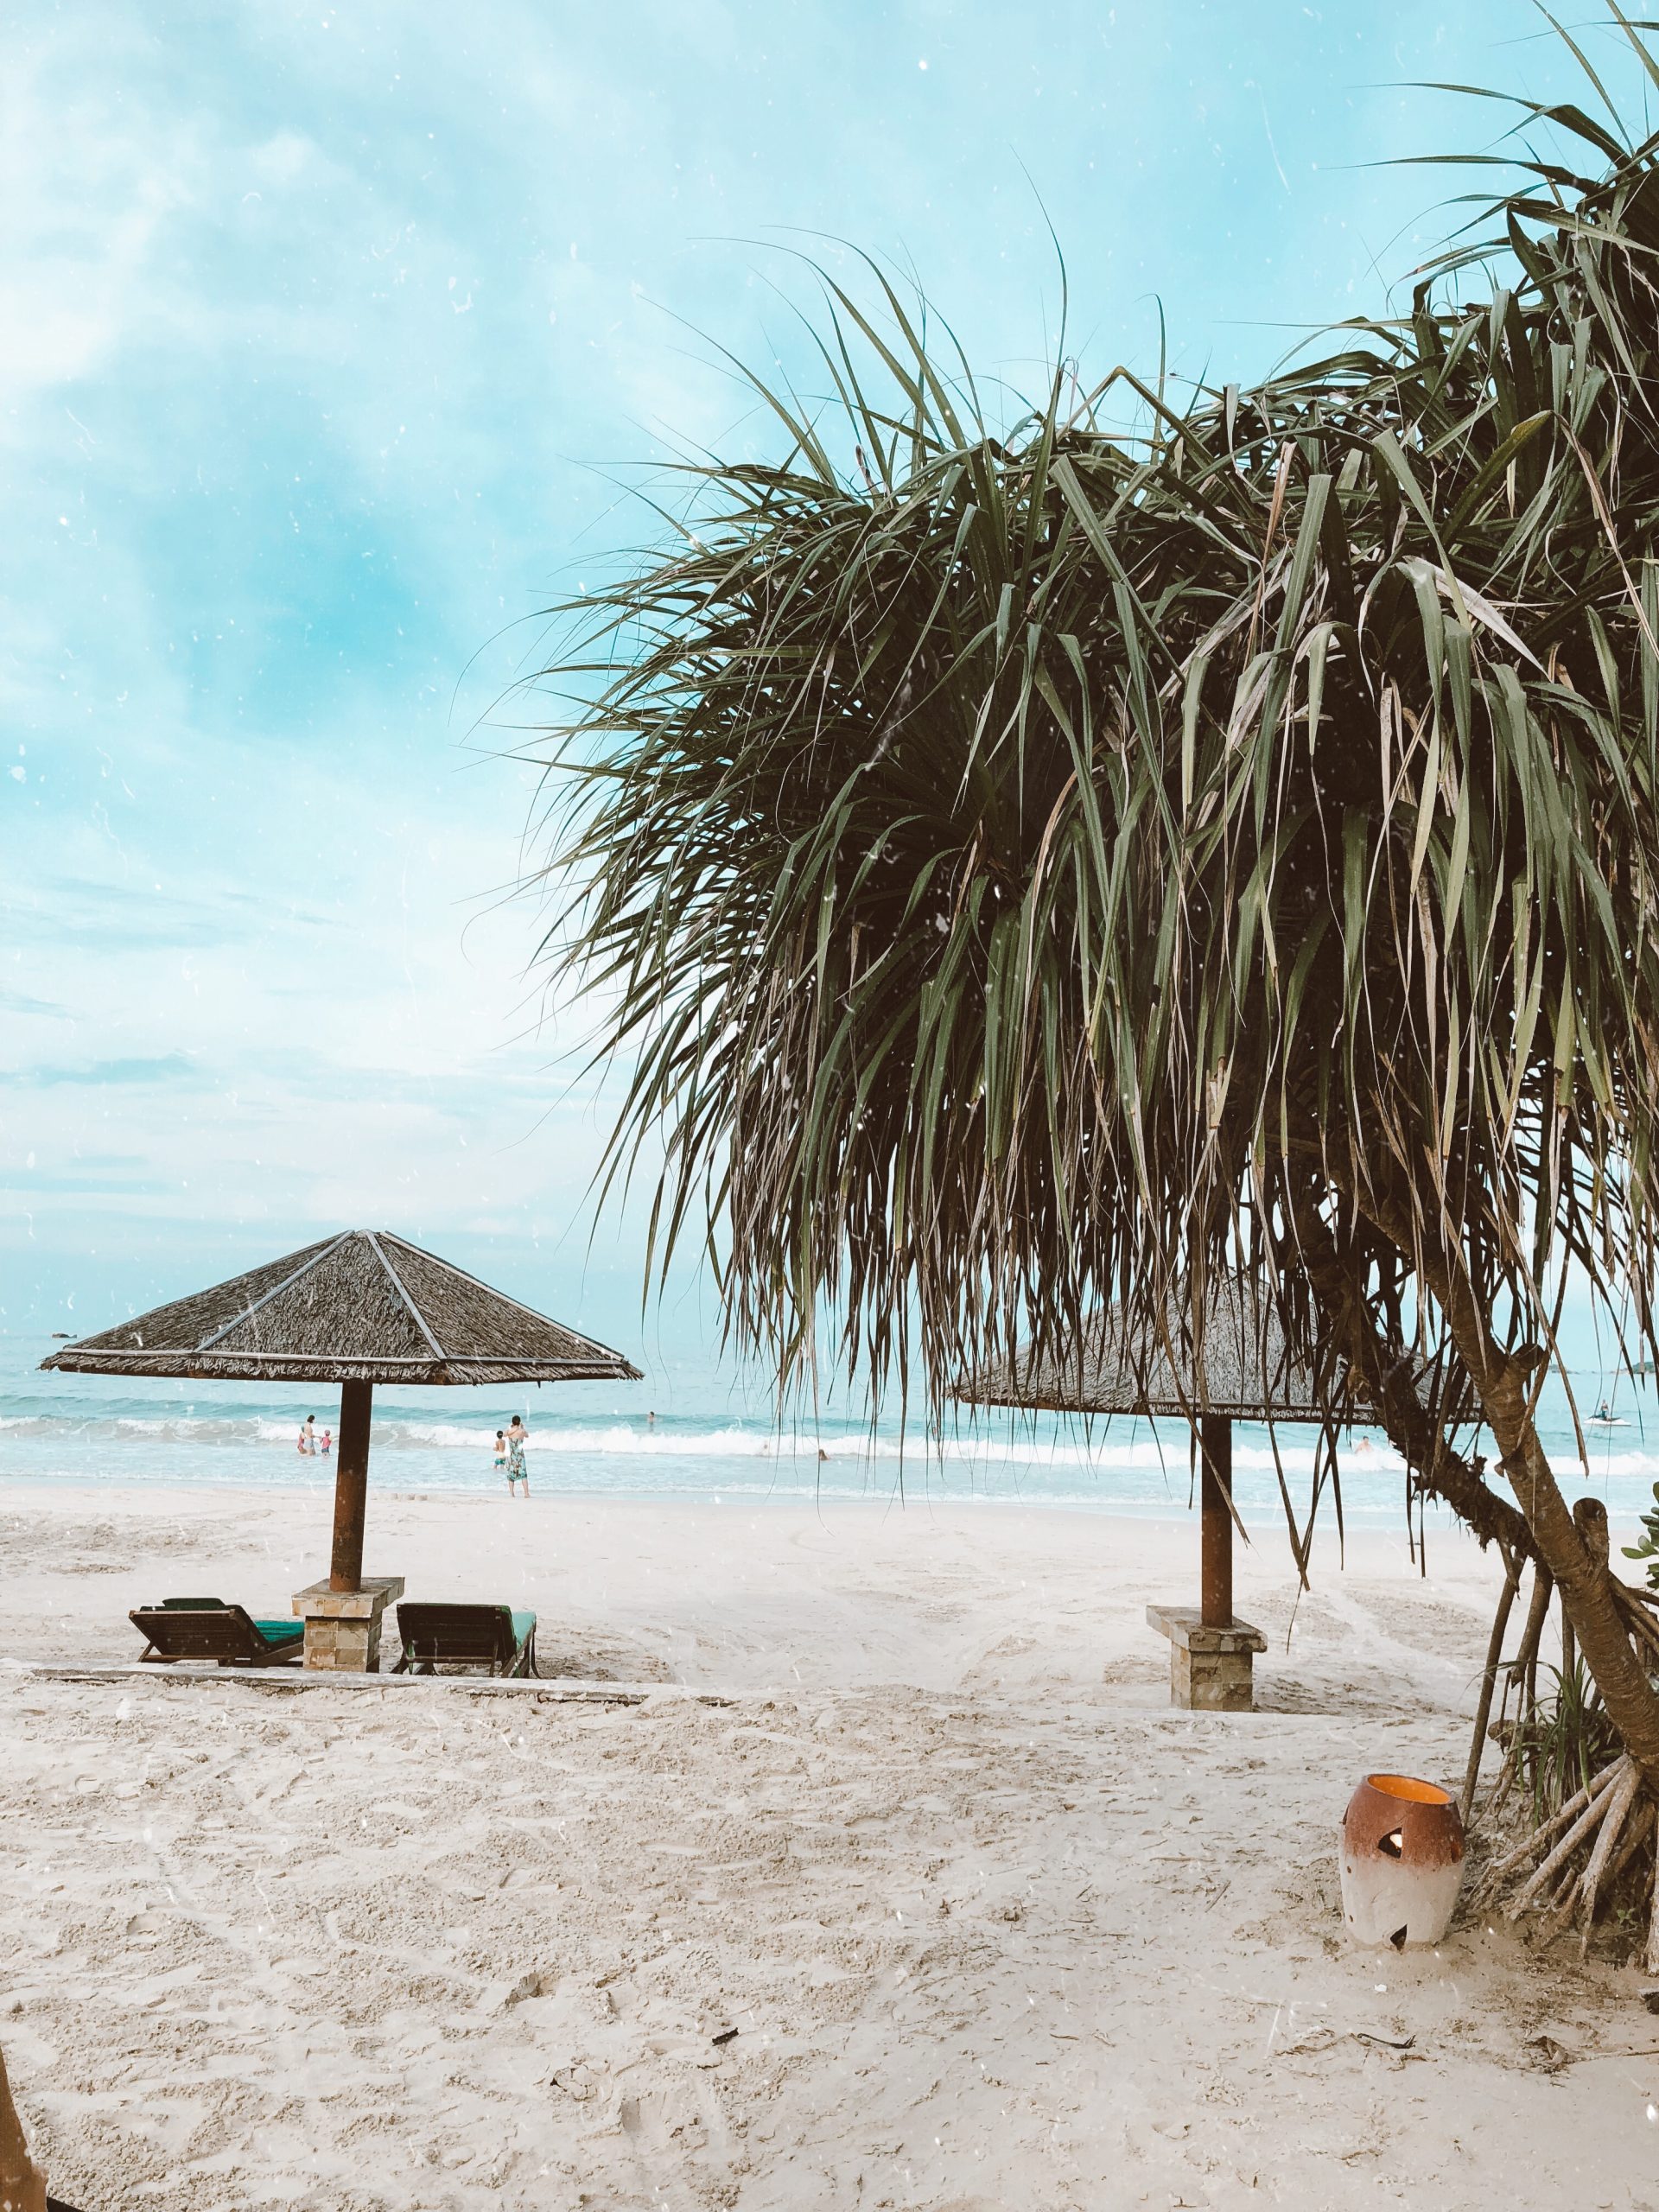 île de Bintan : plage de sable blanc